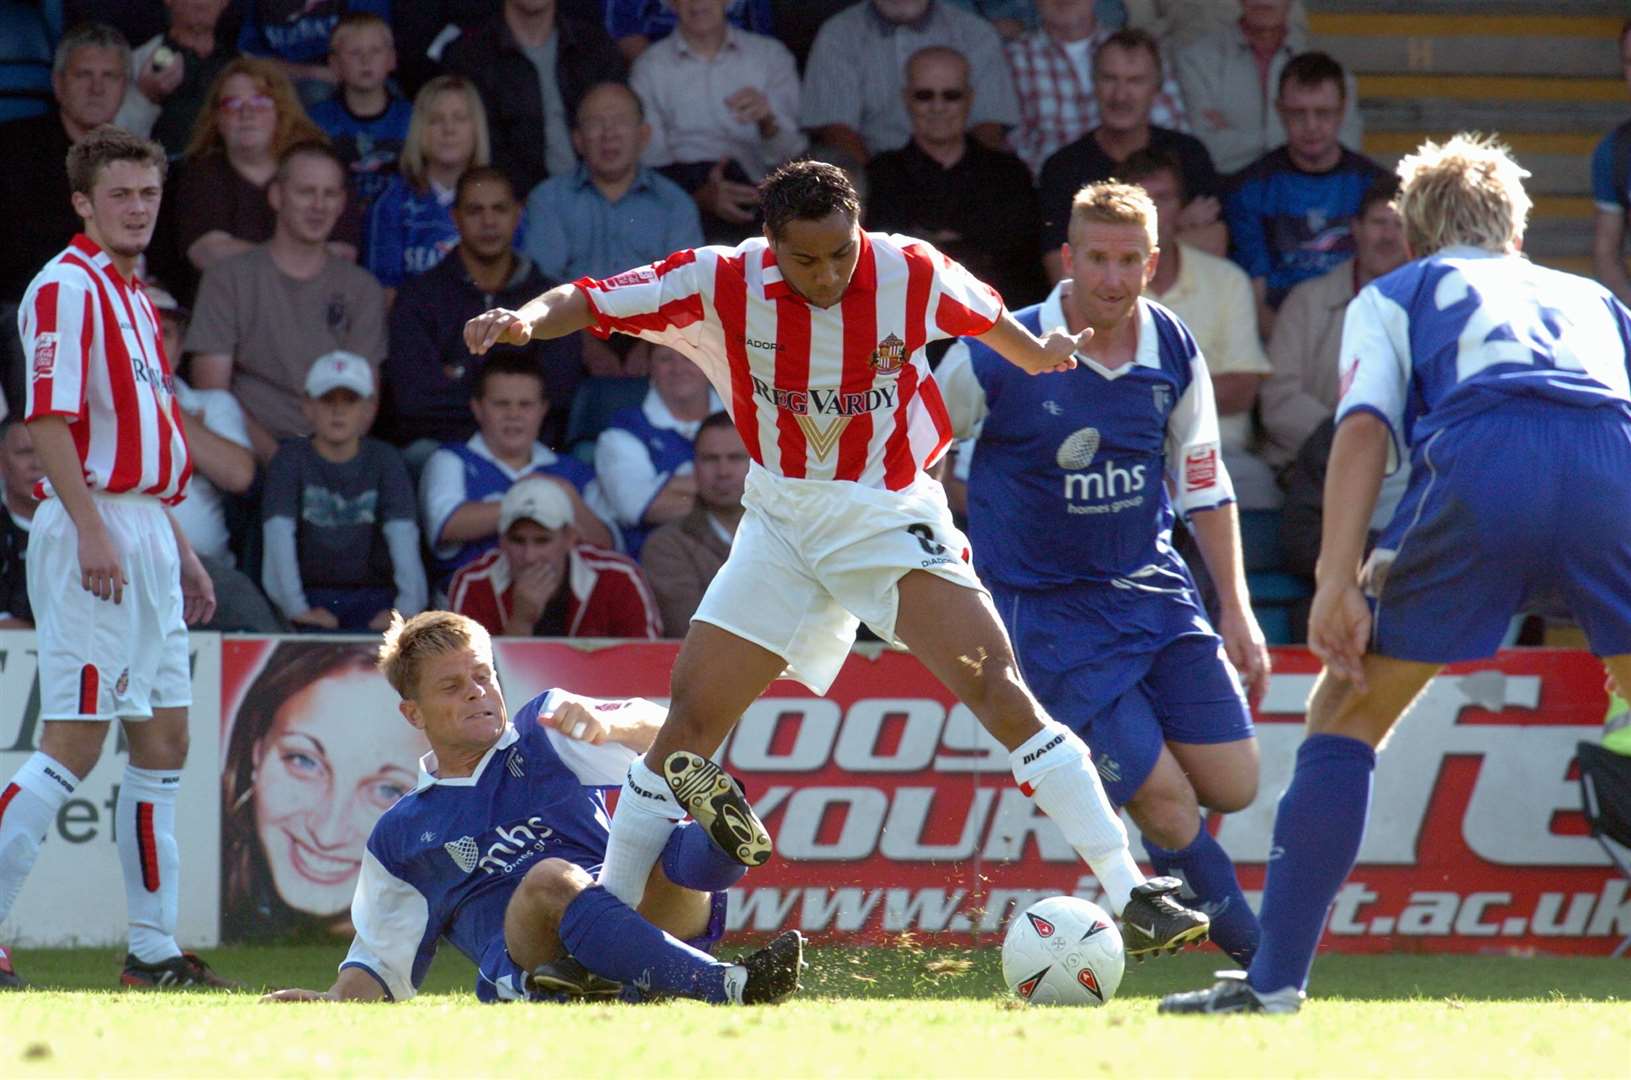 Sunderland versus Gillingham at Priestfield in September in 2004 Picture: Grant Falvey